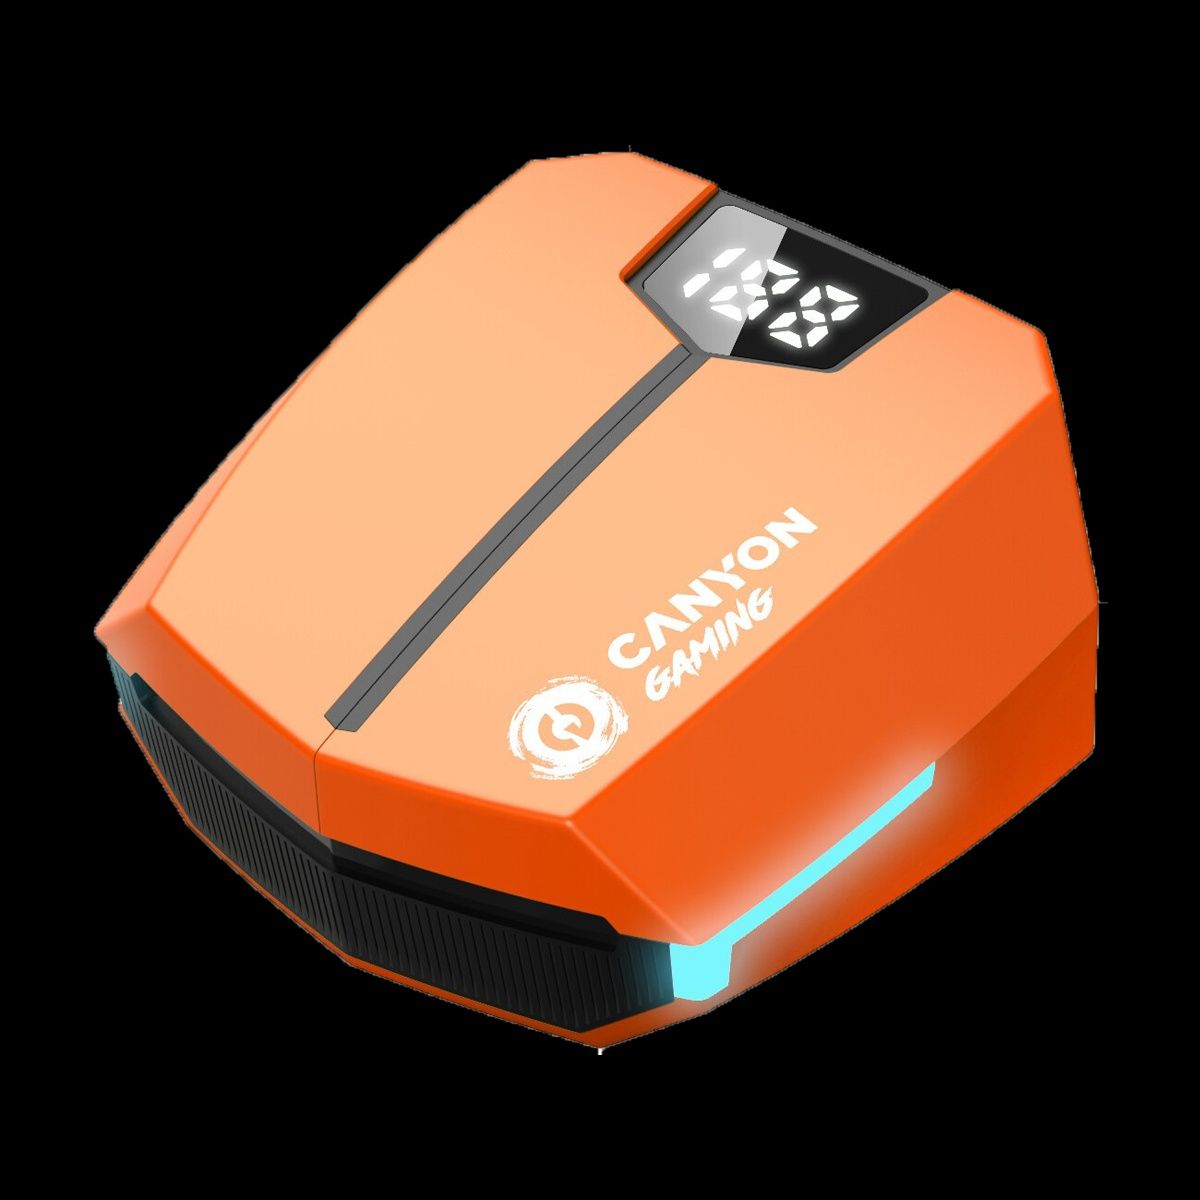 Casti true wireless gaming Doublebee GTWS-2
Orange
Canyon
Casti